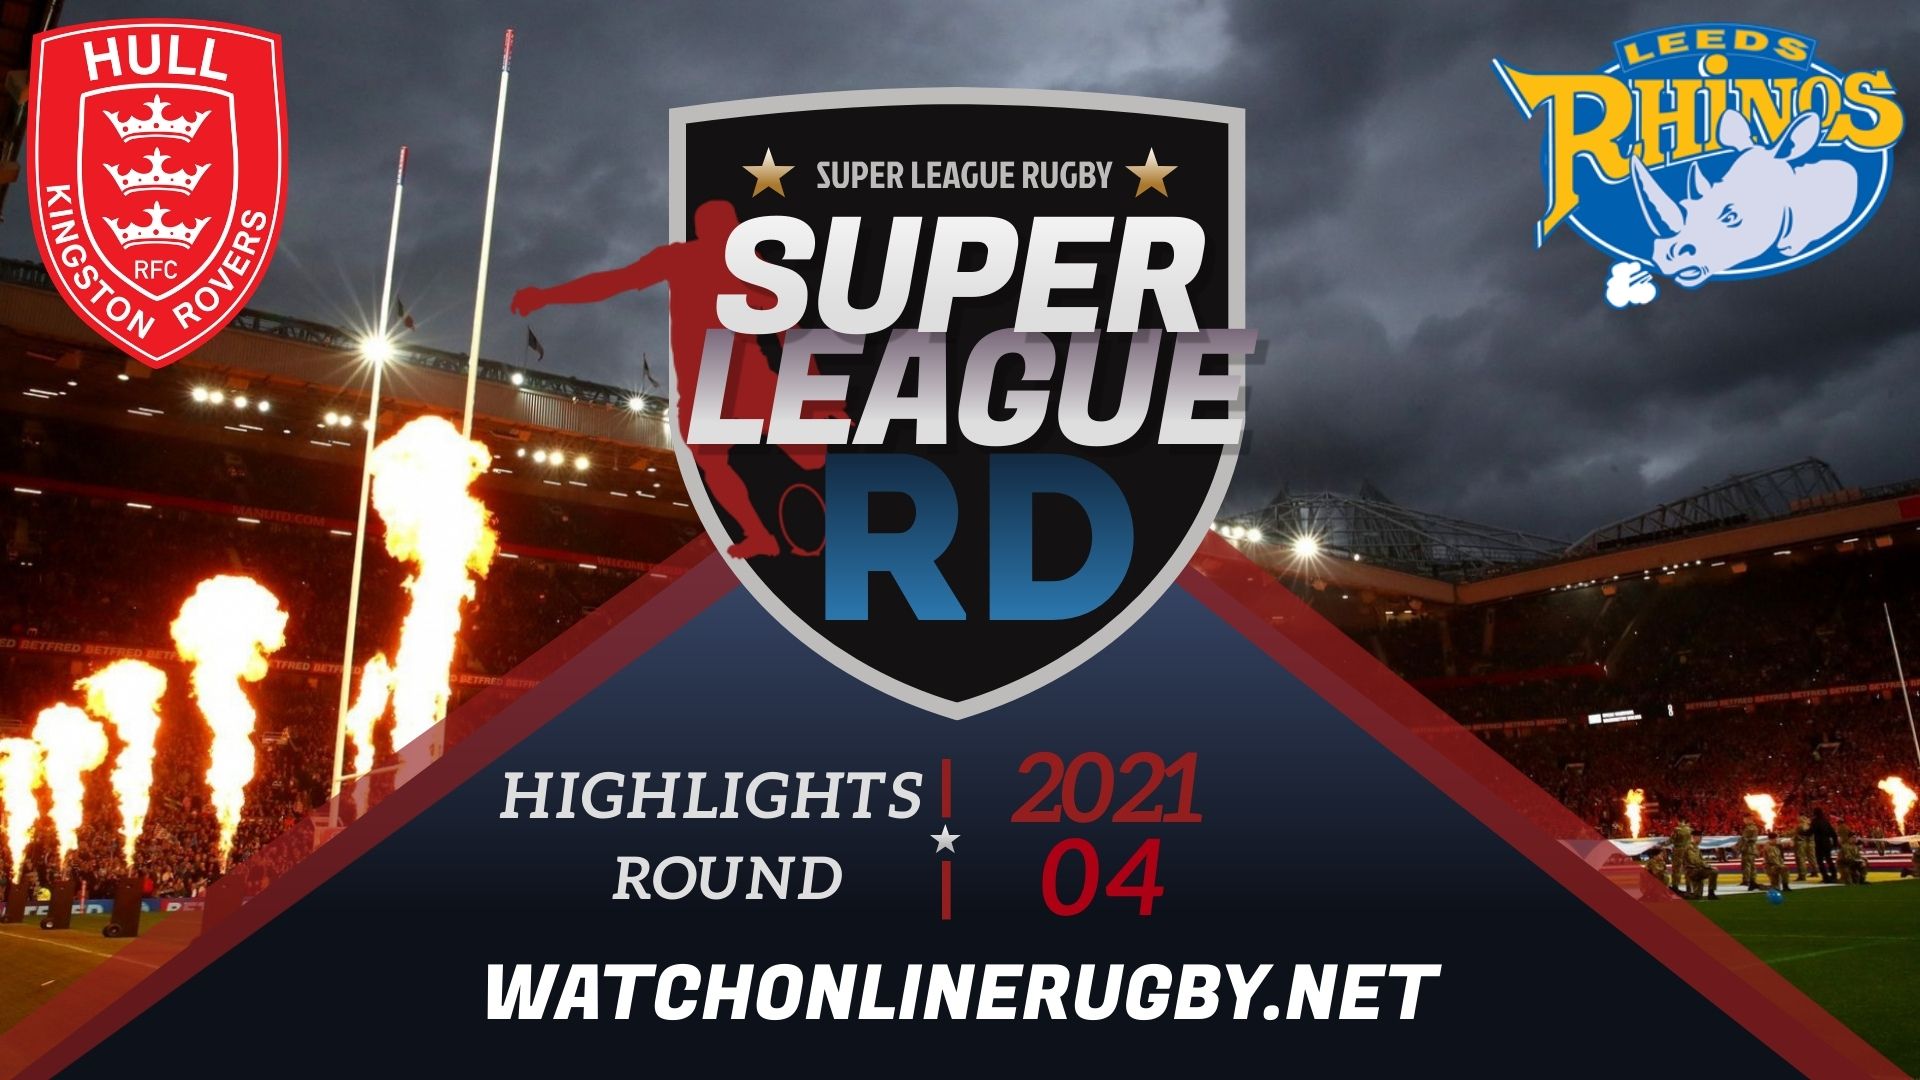 Hull KR Vs Leeds Rhinos Super League Rugby 2021 RD 4